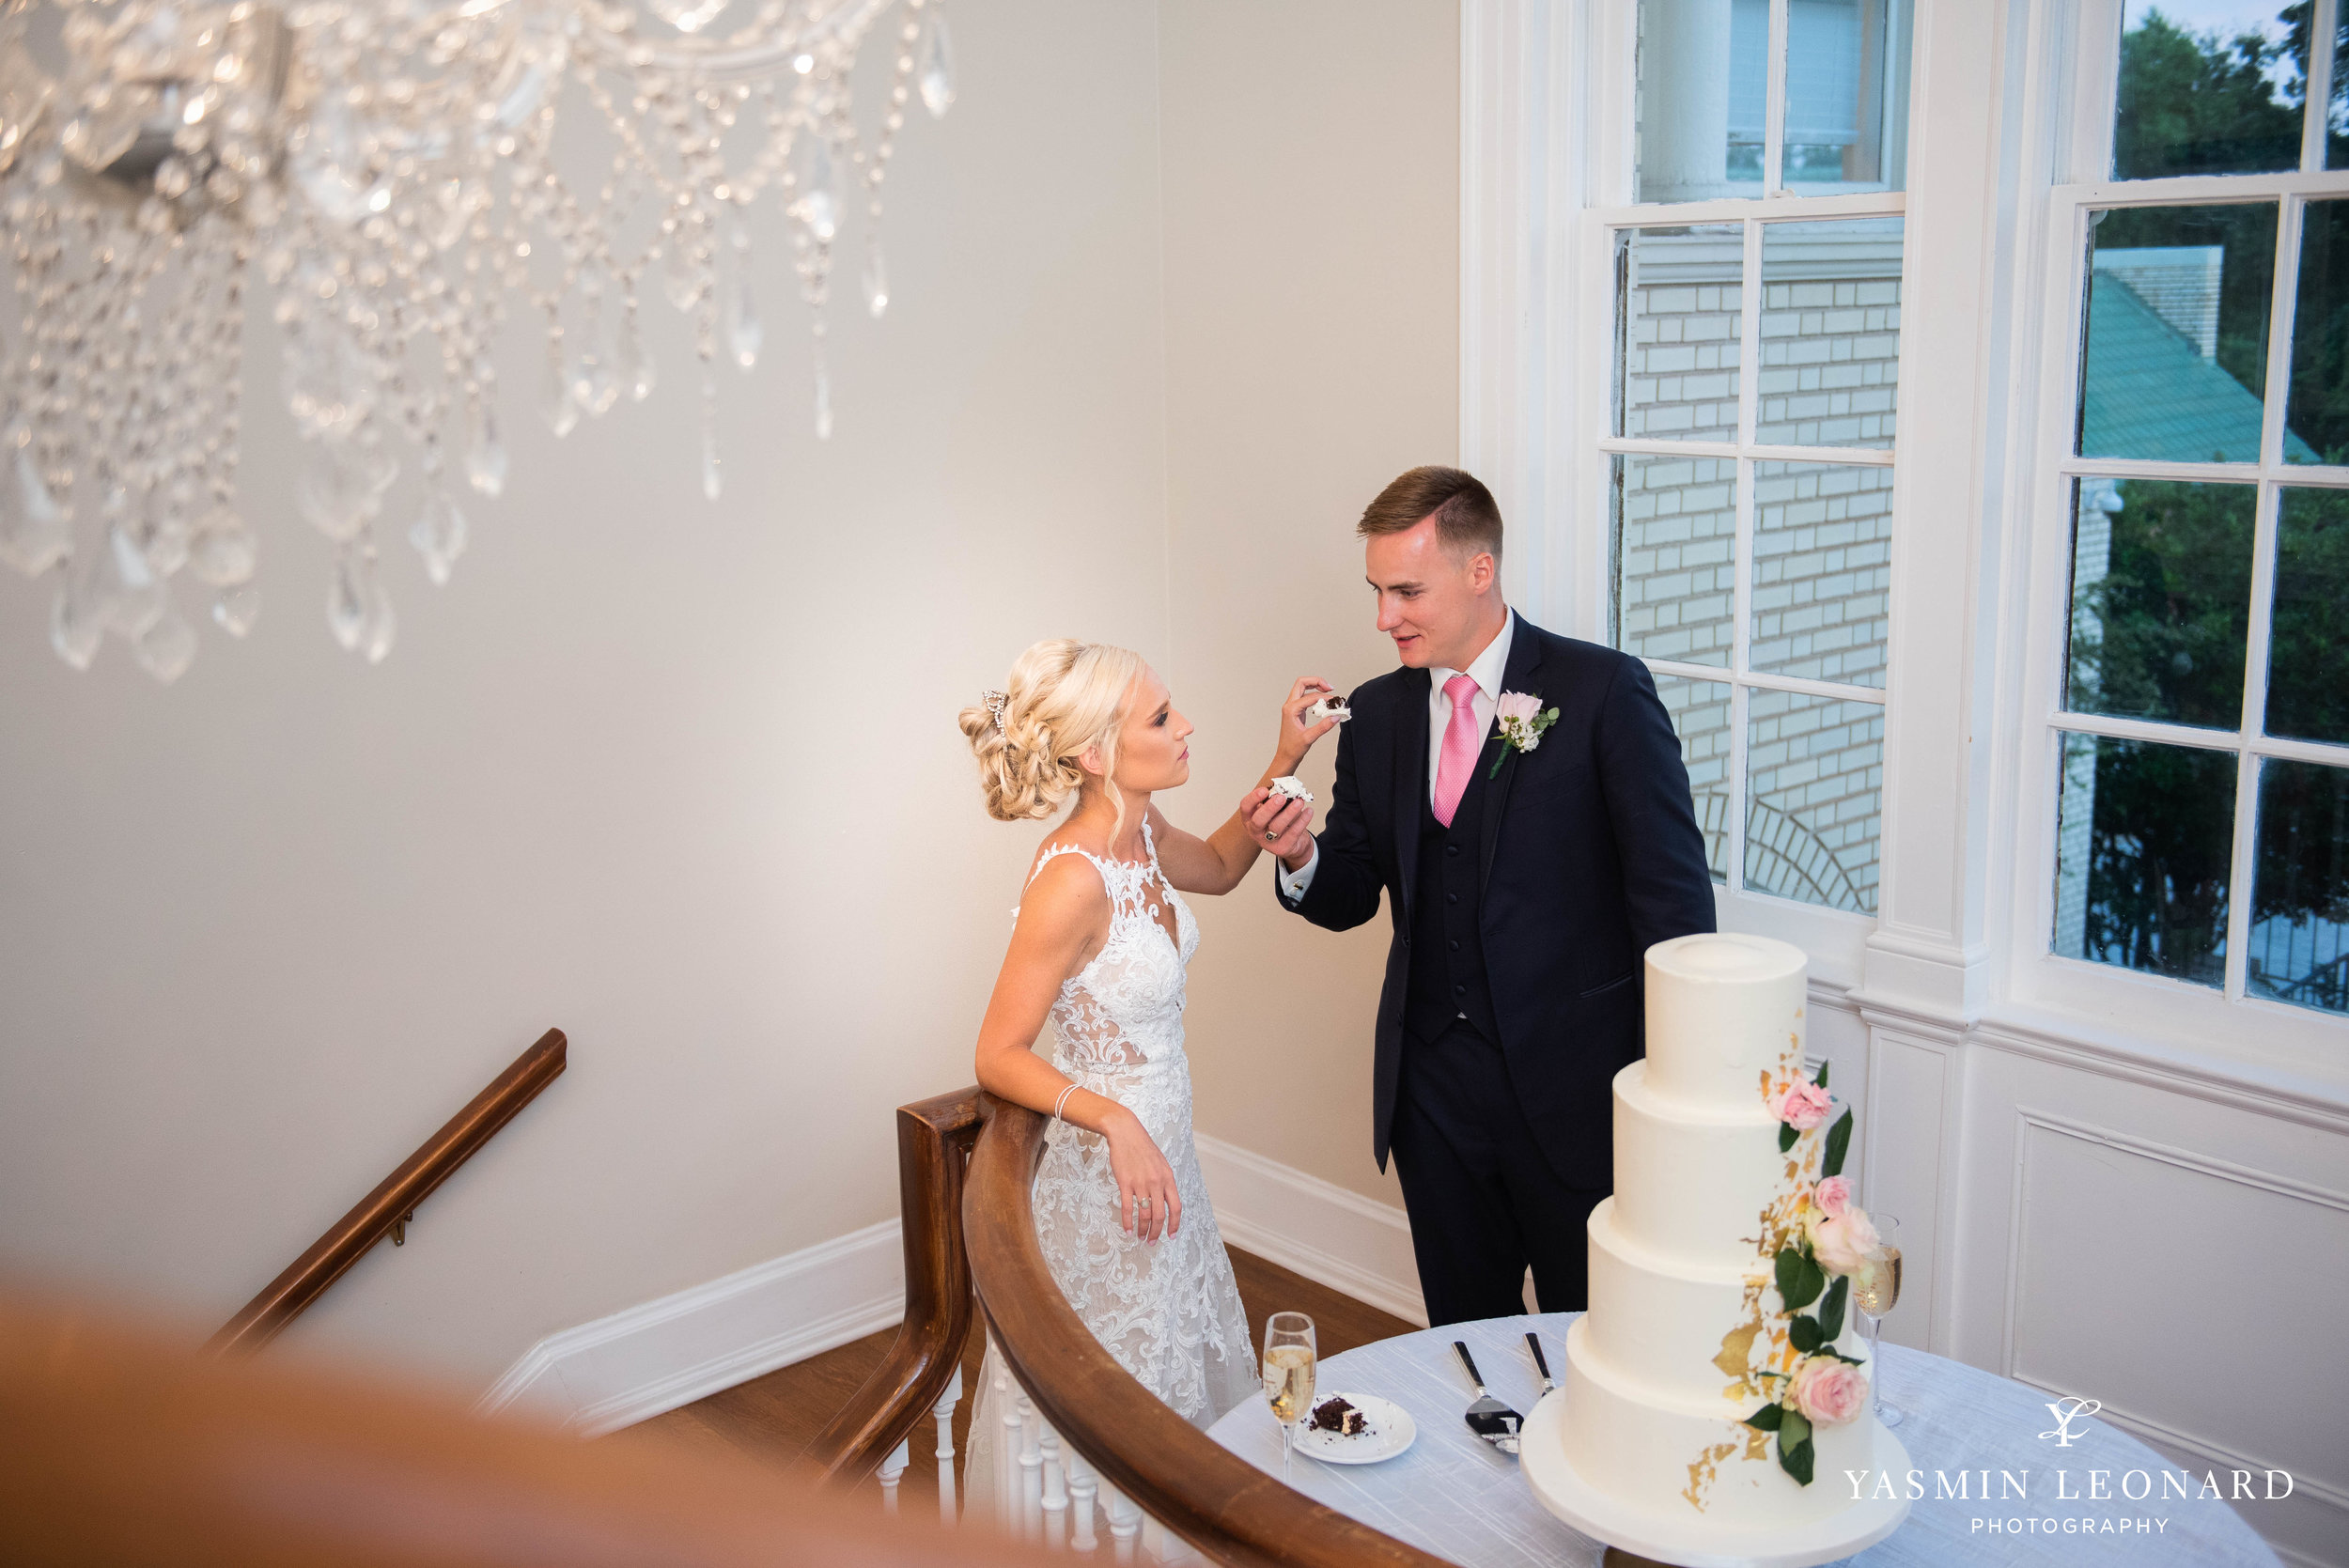 Separk Mansion - NC Weddings - Gastonia Wedding - NC Wedding Venues - Pink and Blue Wedding Ideas - Pink Bridesmaid Dresses - Yasmin Leonard Photography-57.jpg